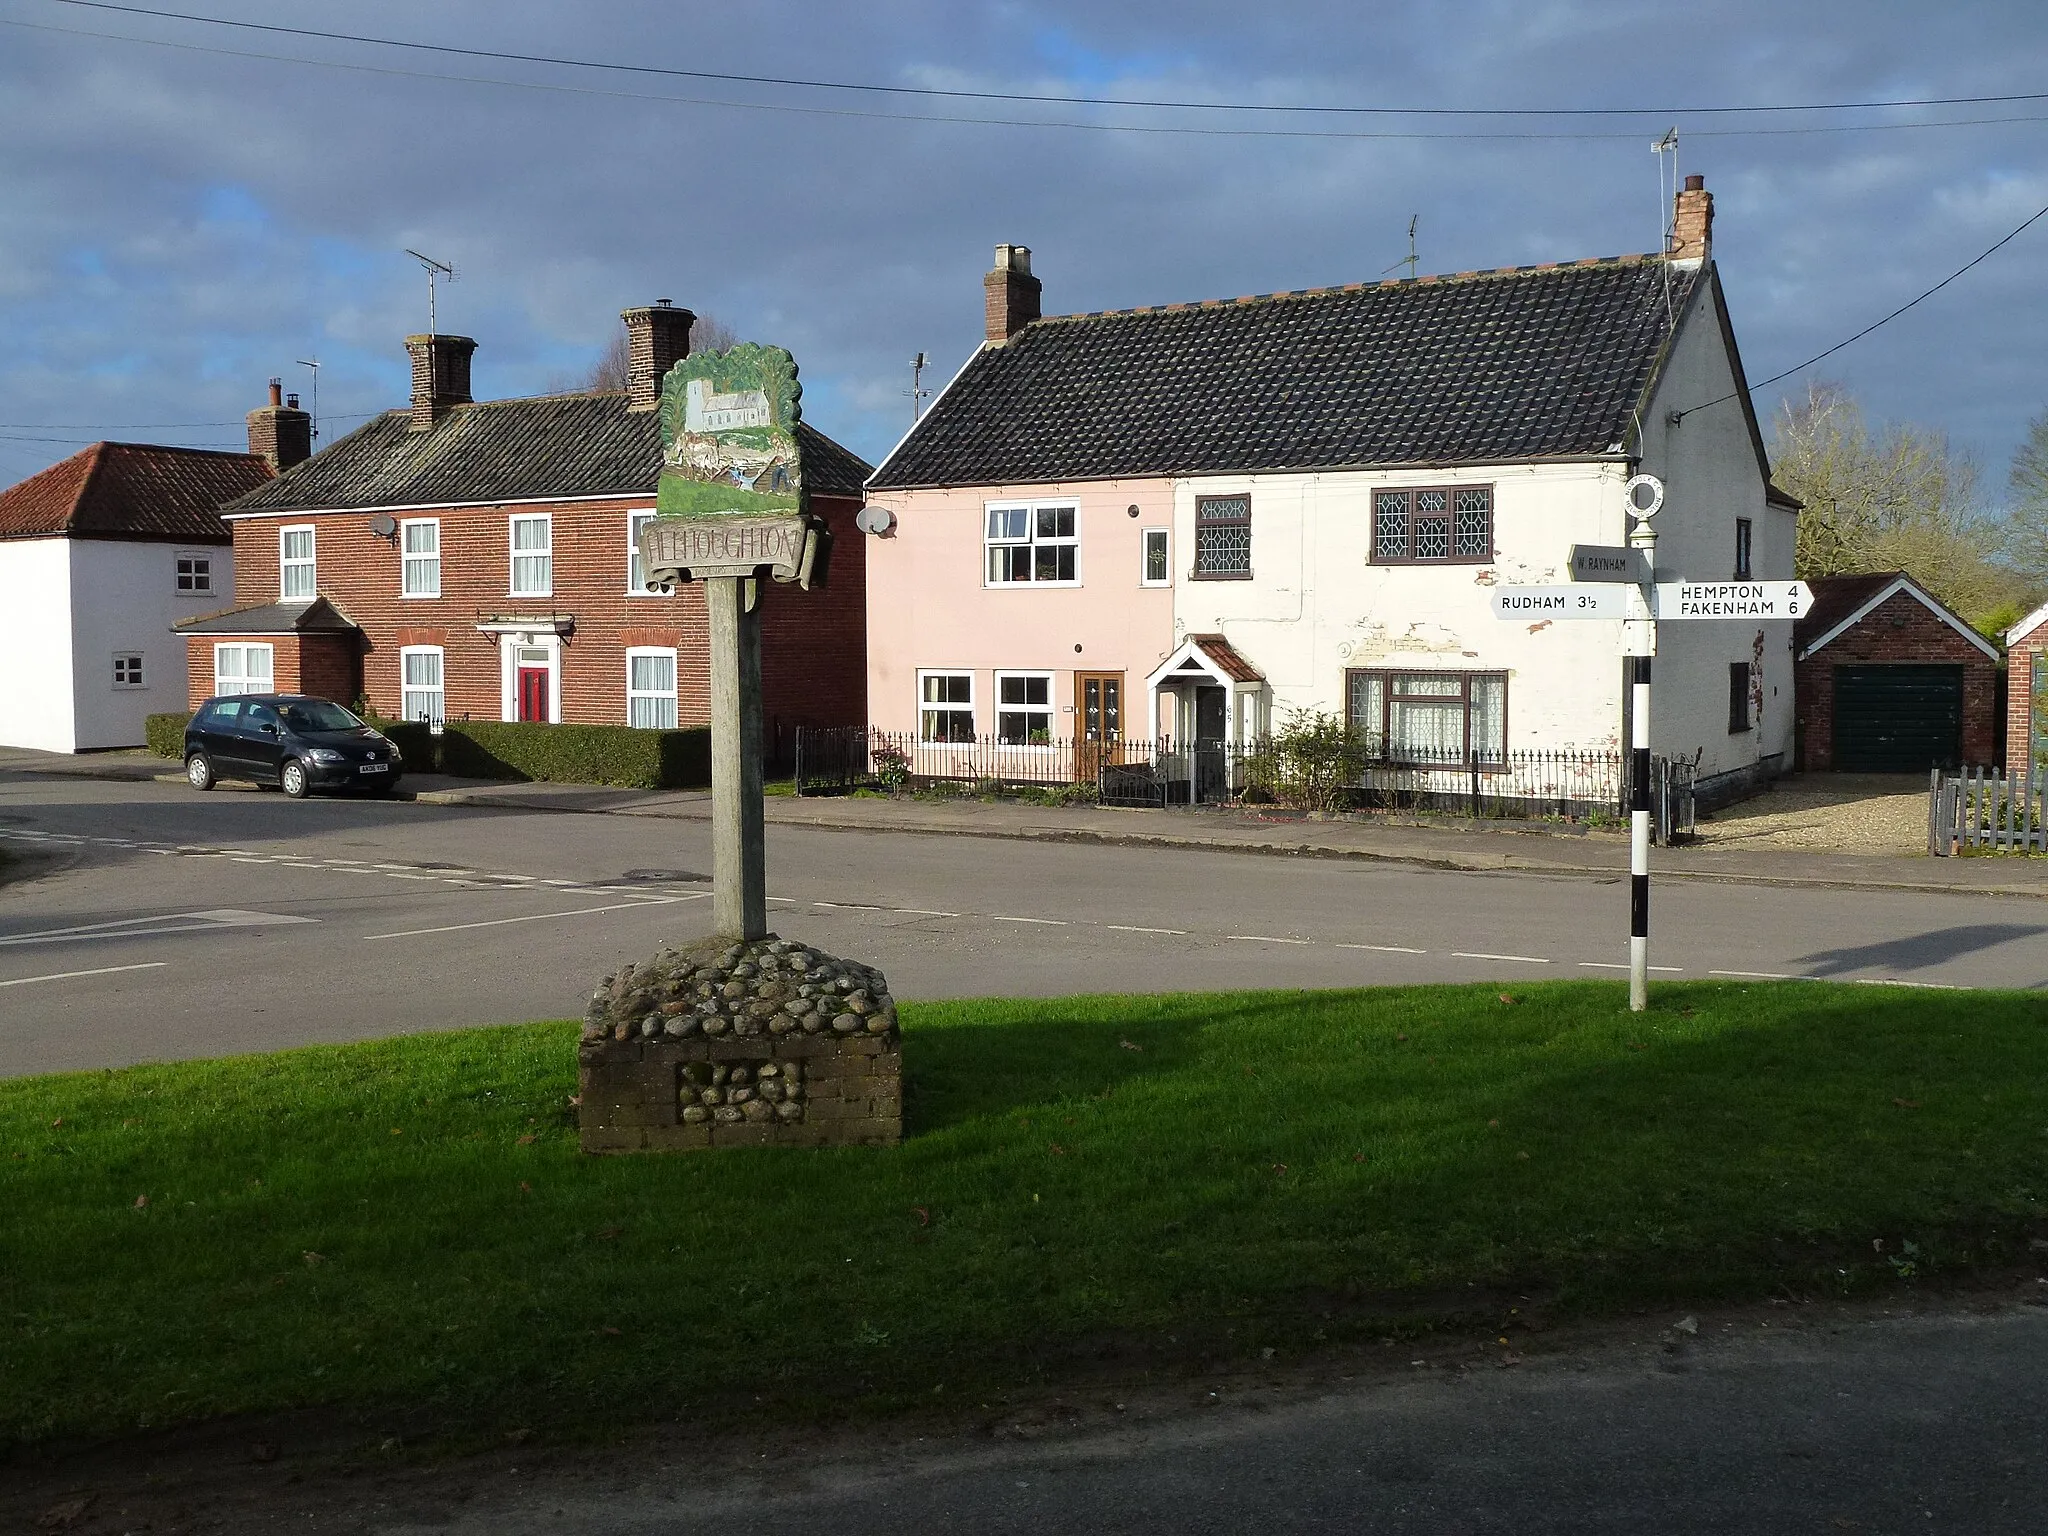 Photo showing: Helhoughton, Norfolk - The village centre